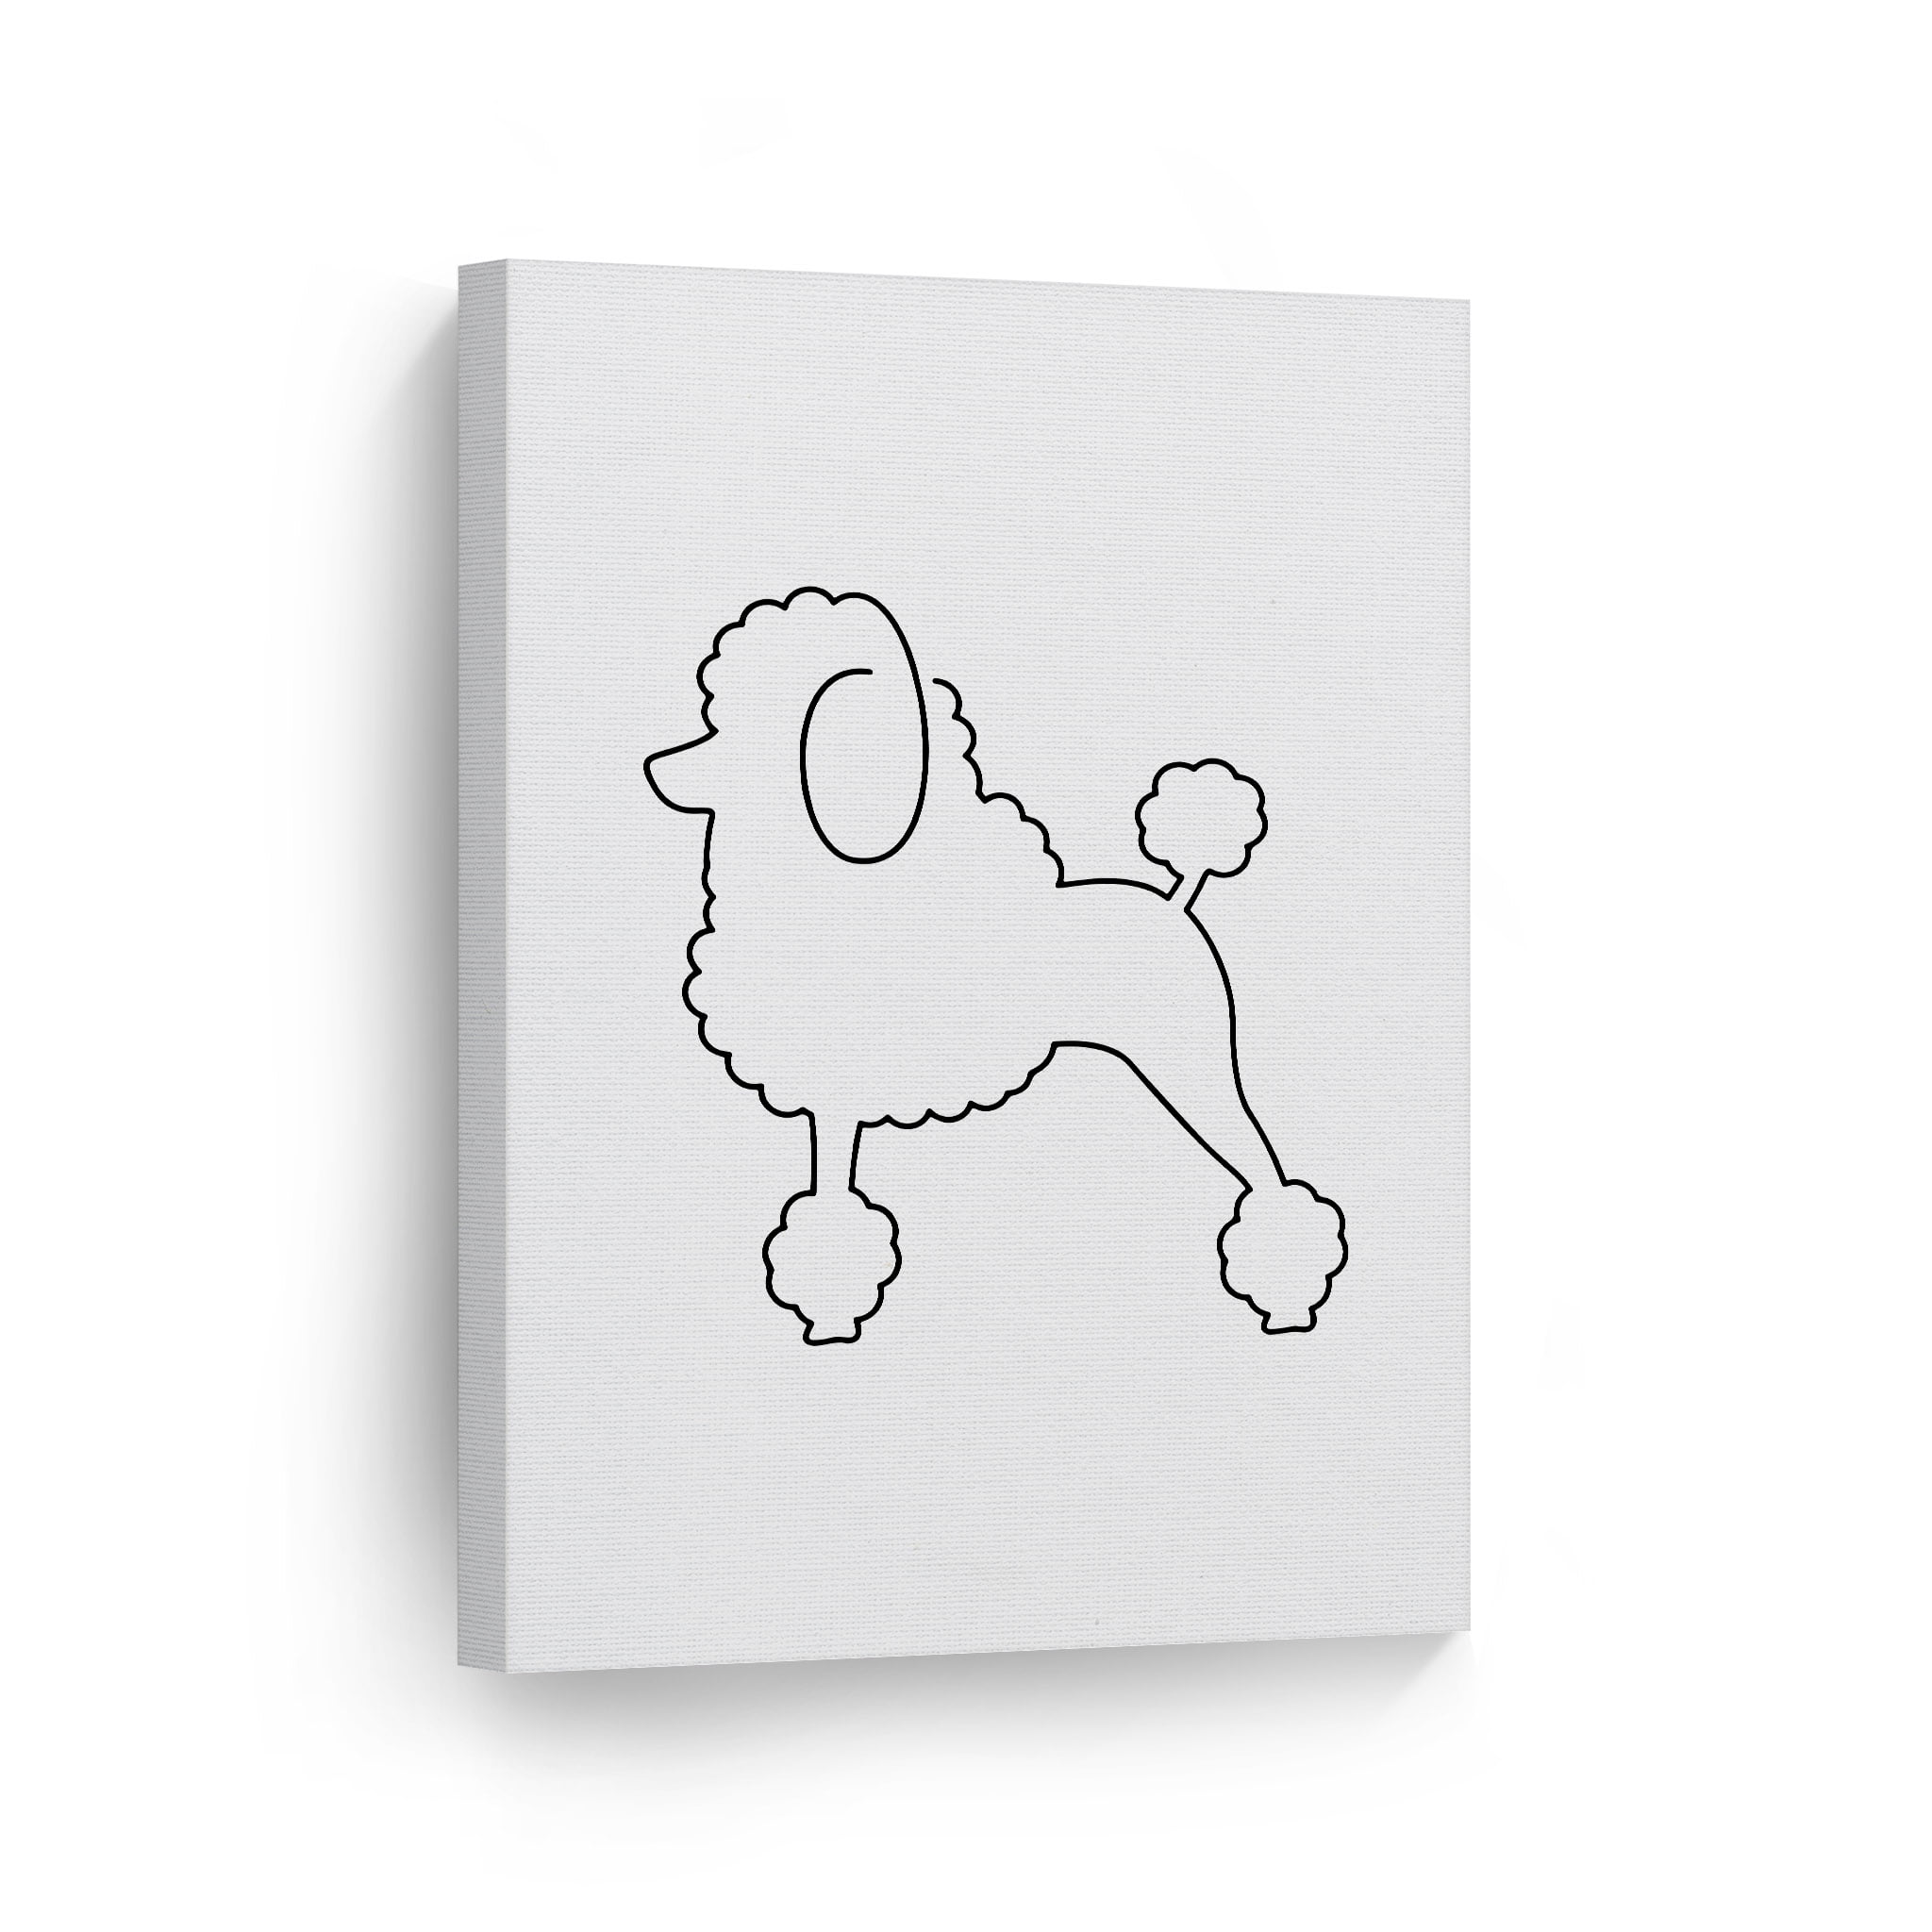 Vent et øjeblik drivhus fællesskab Smile Art Design Black and White One Line Minimalism Art Poodle Dog Animal  Abstract Canvas Wall Art Print Office Living Room Dorm Bedroom Aesthetic  Modern Home Decor Ready to Hang - 12x8 -